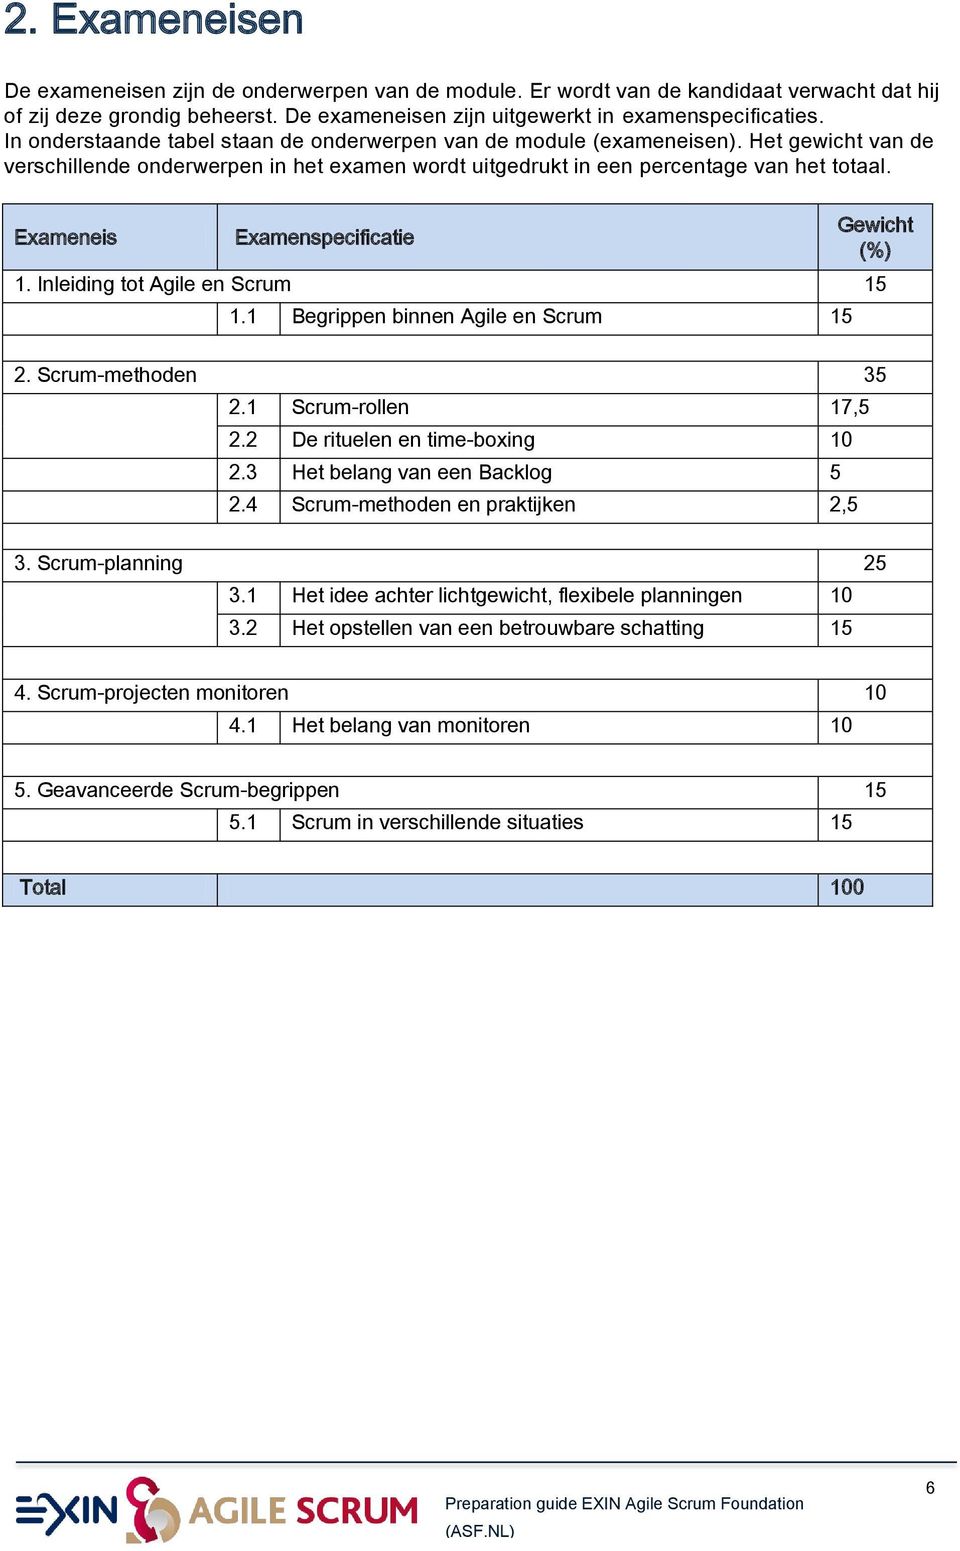 Exameneis Examenspecificatie Gewicht (%) 1. Inleiding tot Agile en Scrum 15 1.1 Begrippen binnen Agile en Scrum 15 2. Scrum-methoden 35 2.1 Scrum-rollen 17,5 2.2 De rituelen en time-boxing 10 2.